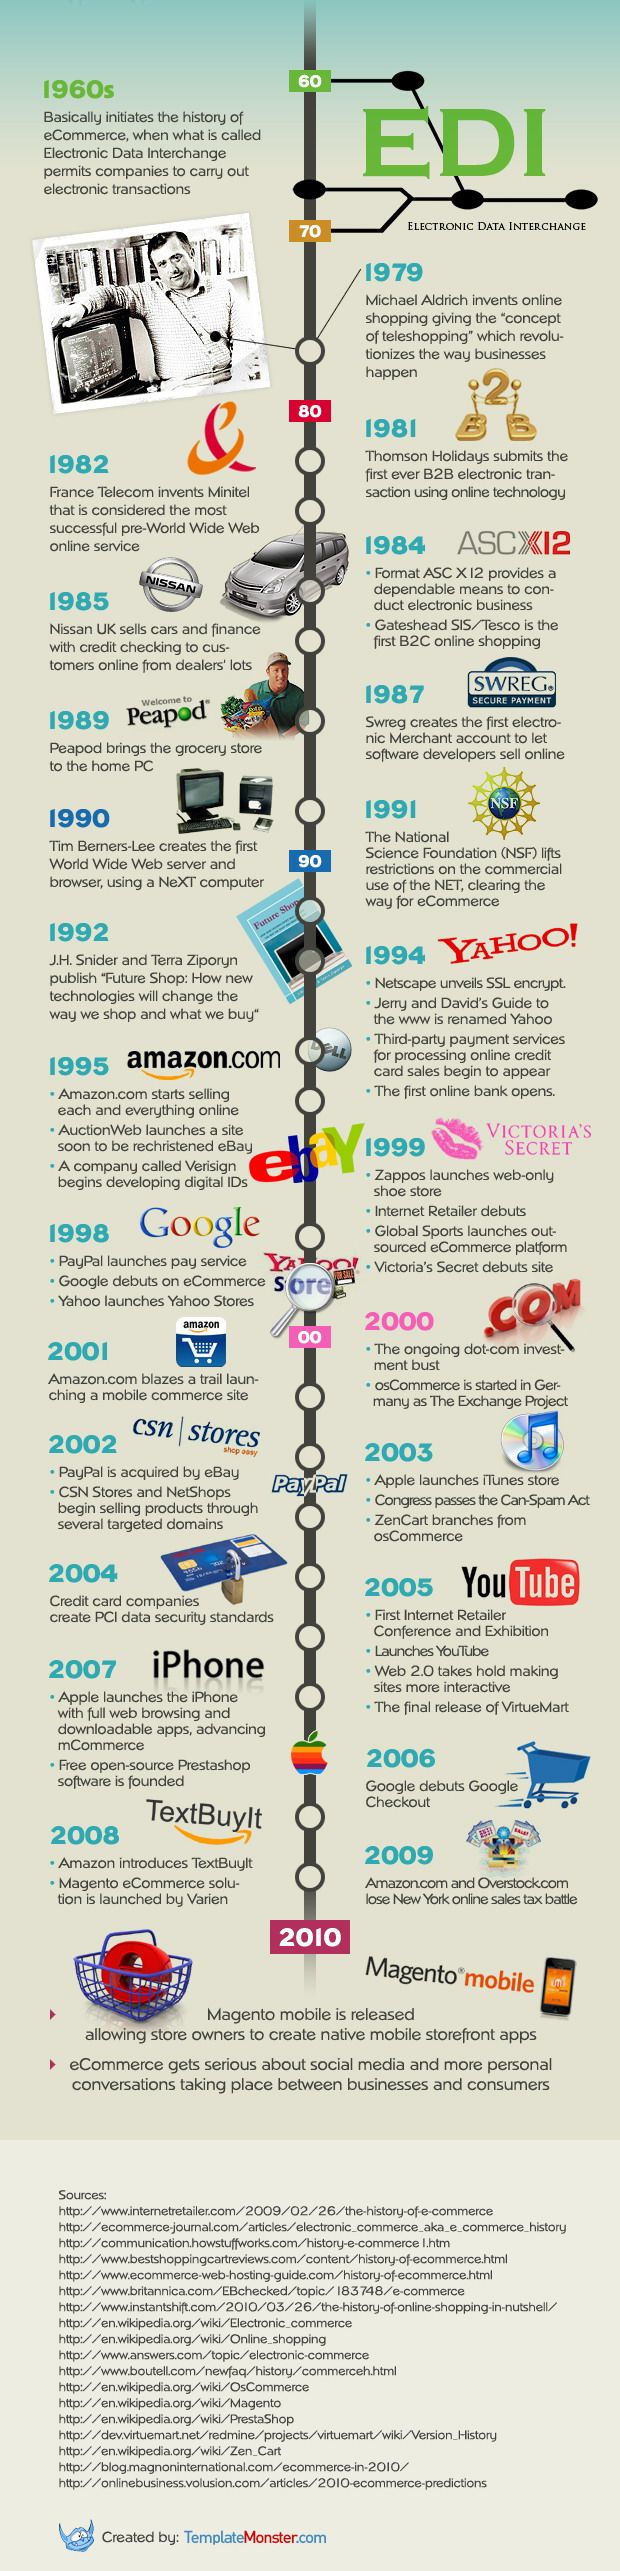 E-Commerce History - Infographic